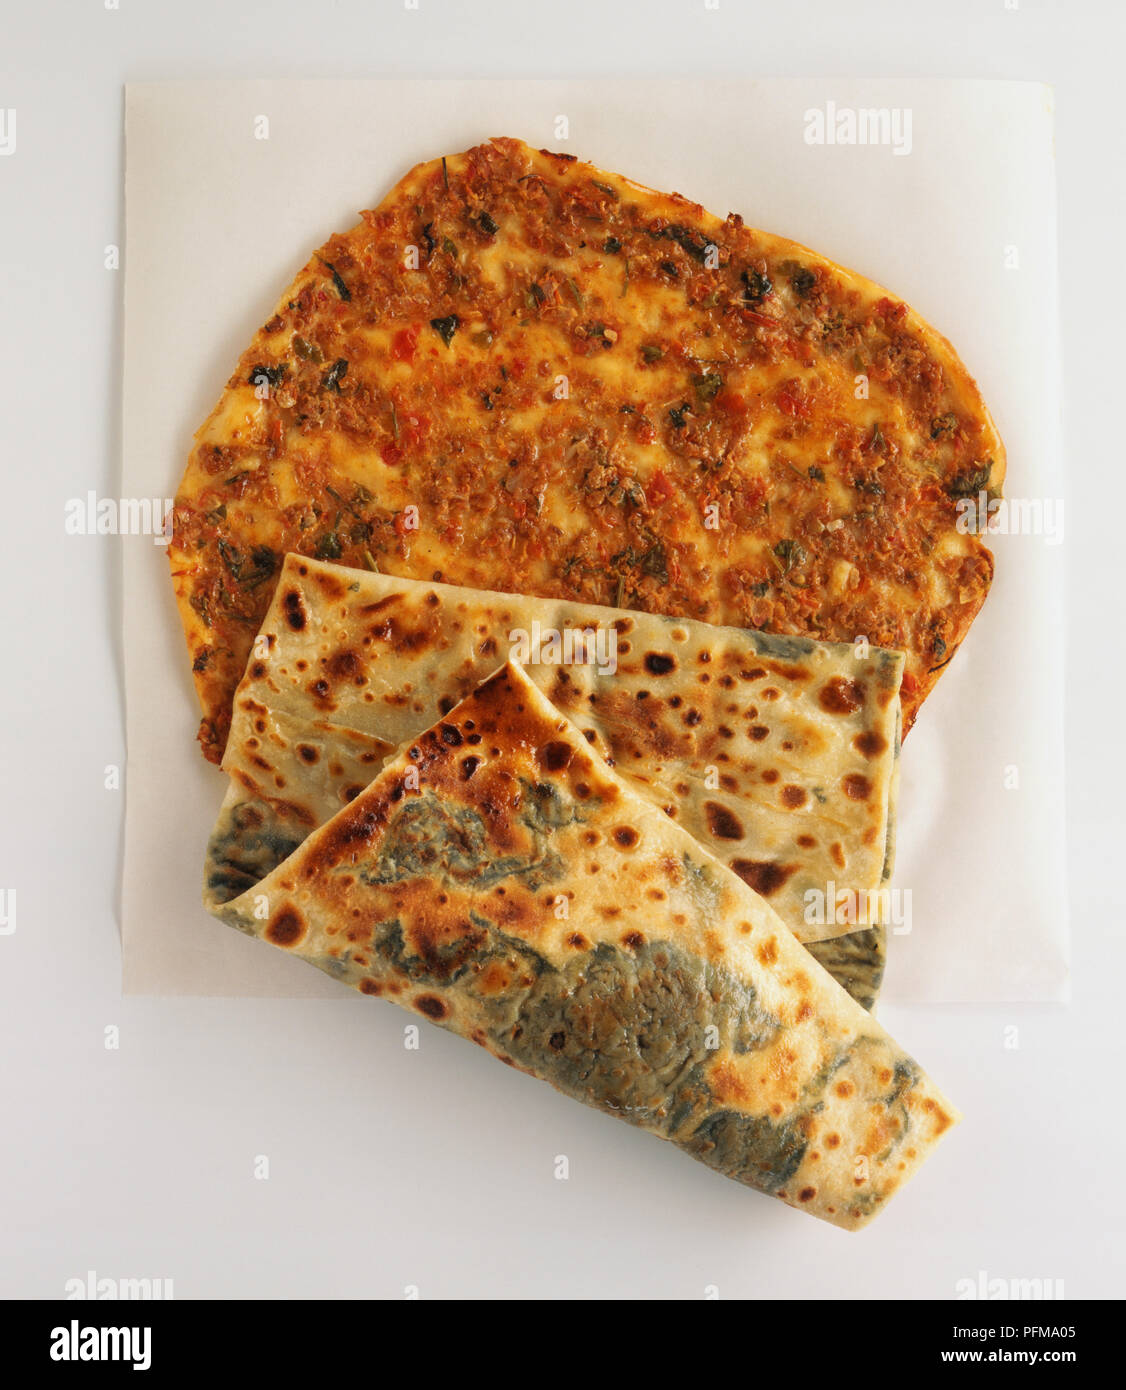 Türkisches Brot-basierte Snacks, Lahmacun, dünne, flache, Pizza - style Snack, Gözleme, gefaltet oder gerollt, schmackhaften Brot. Stockfoto